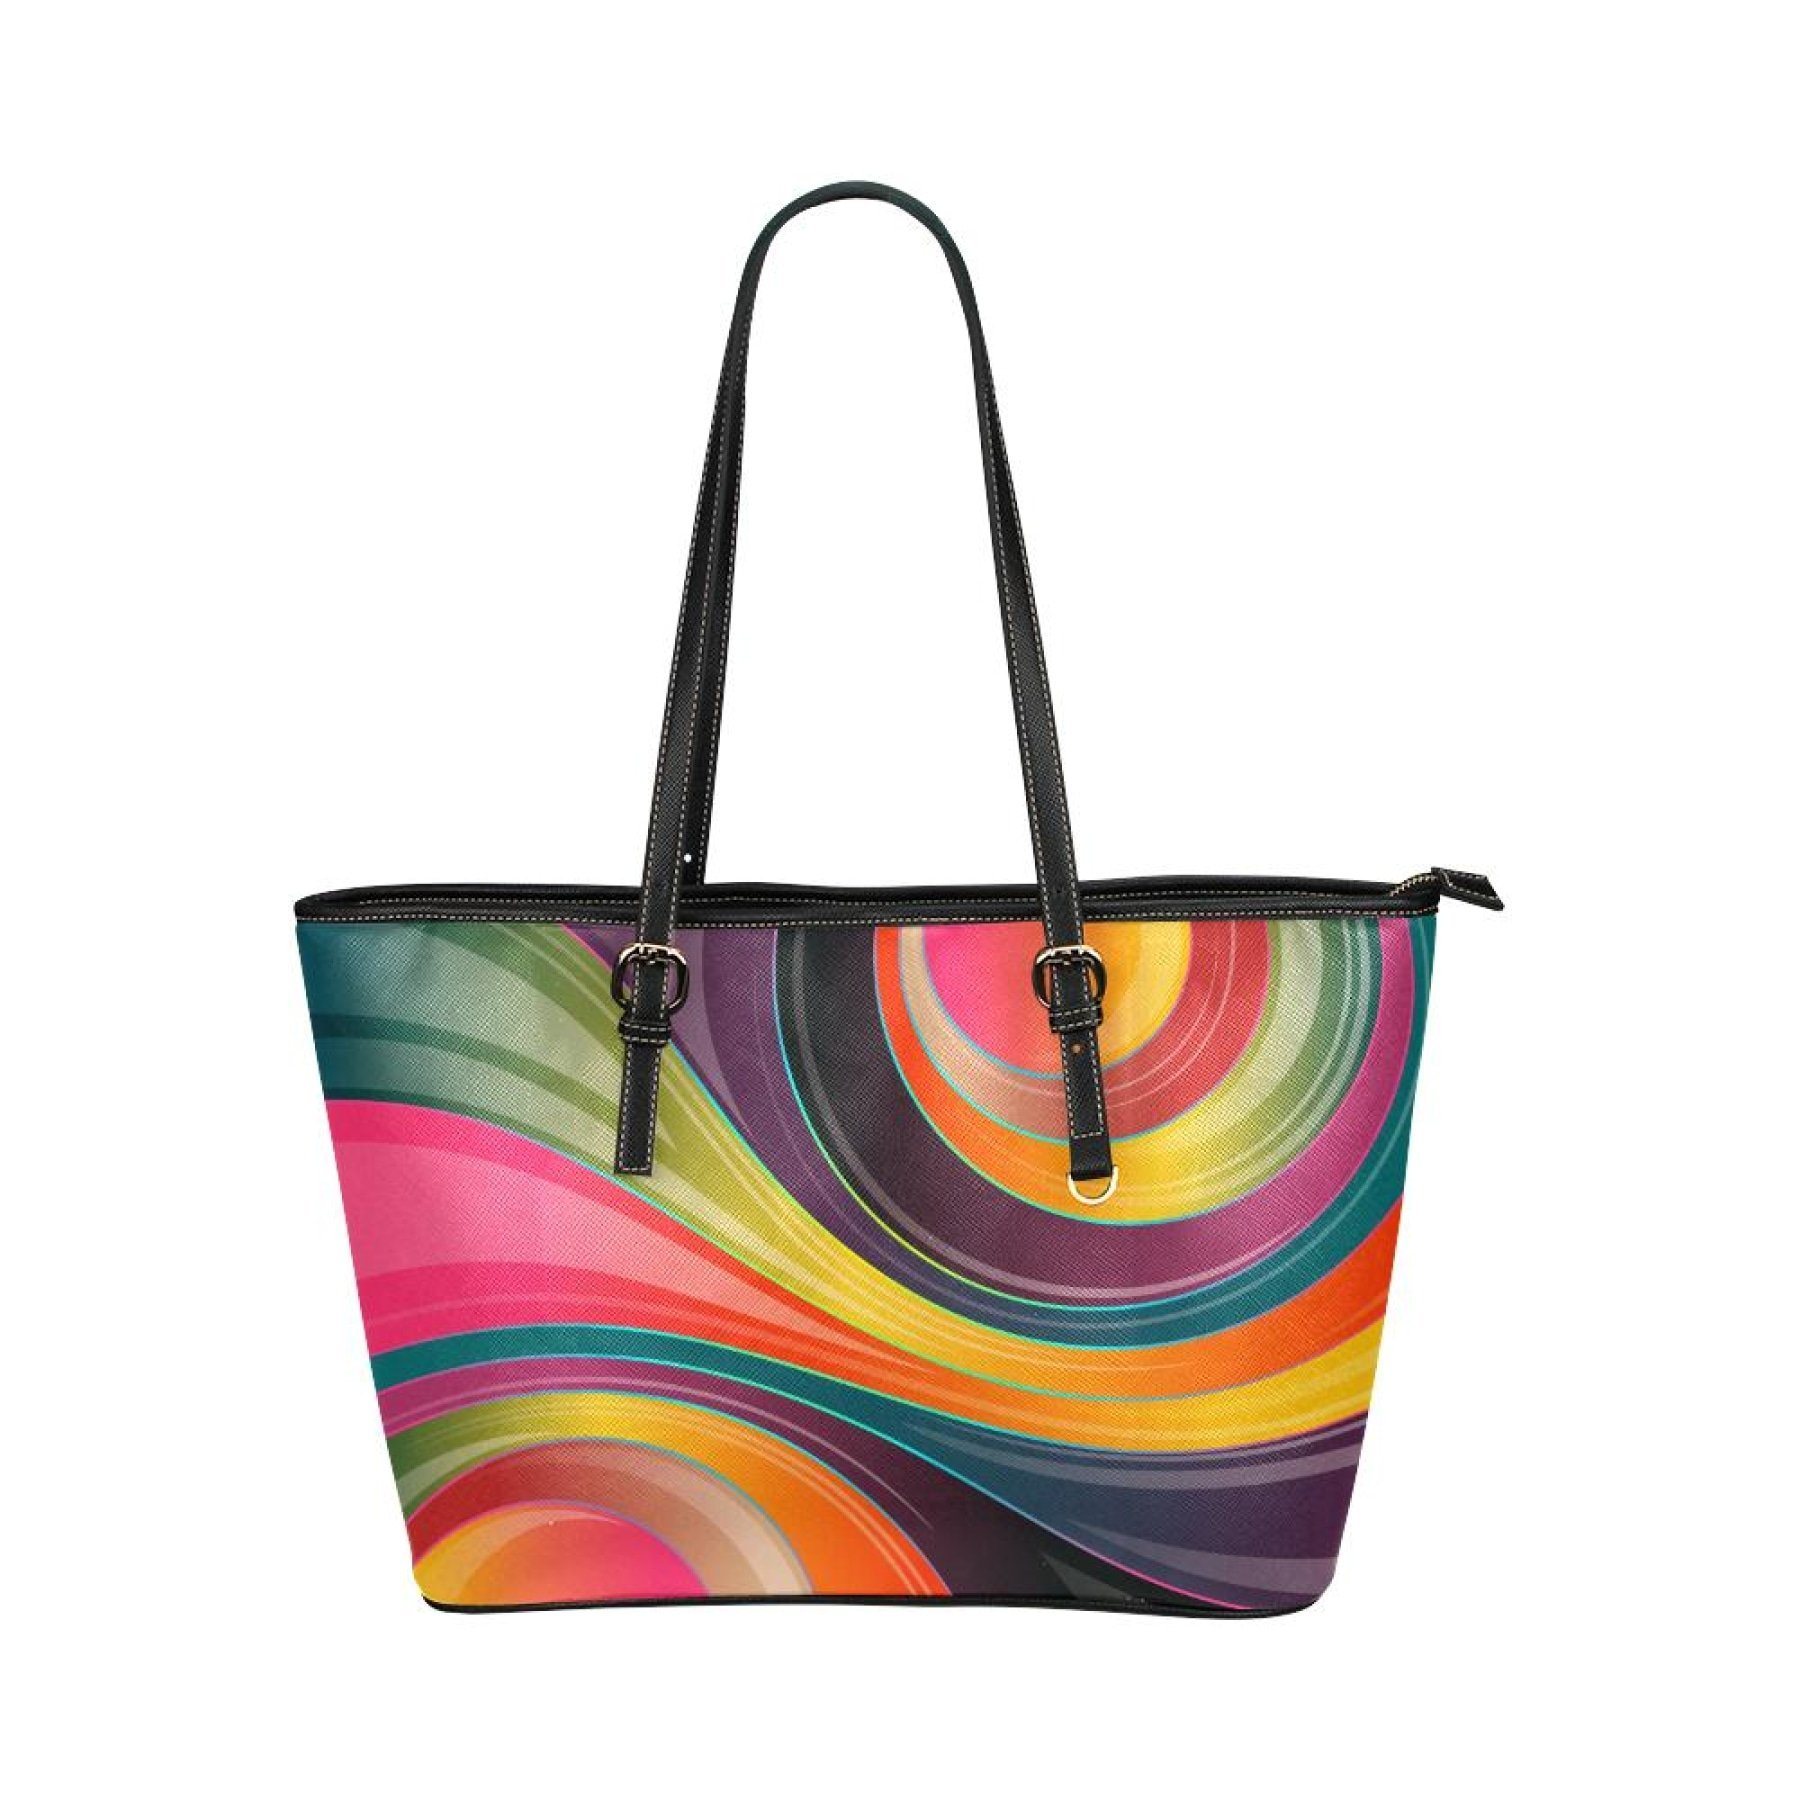 Colorful Circular Geometric Style Tote Bag 18